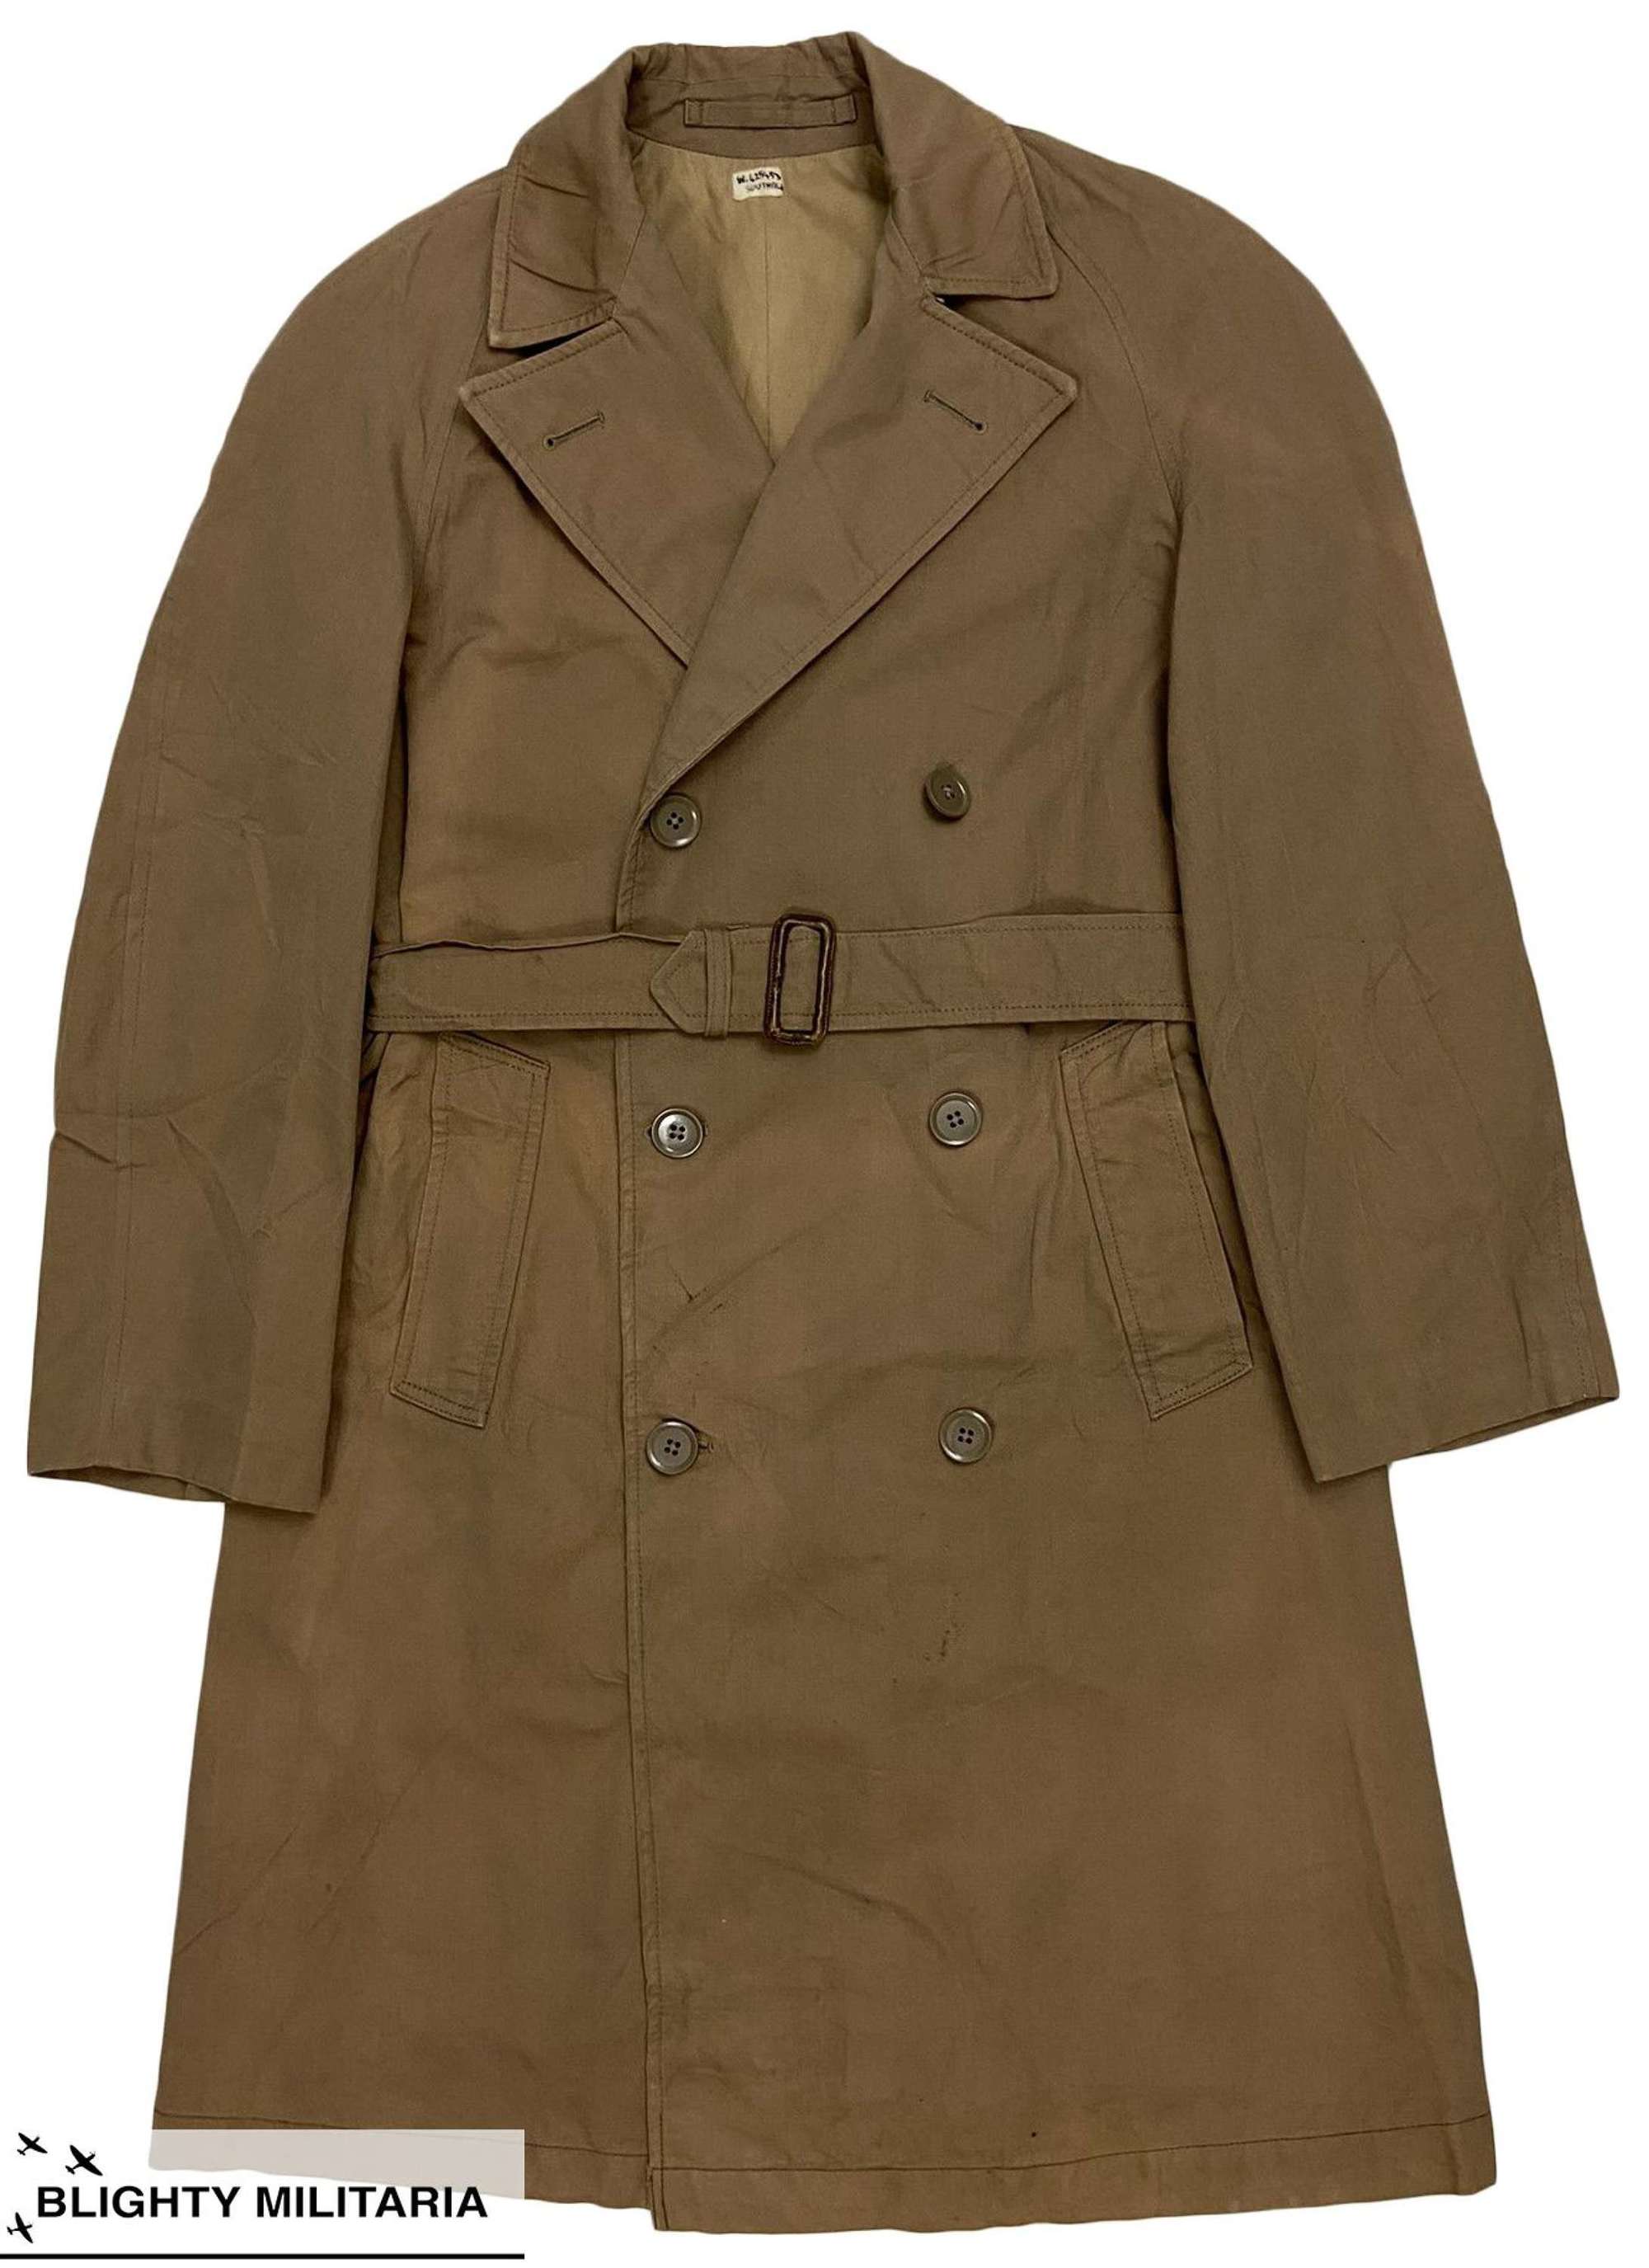 Original 1964 Dated Women's Military Raincoat - Size 1